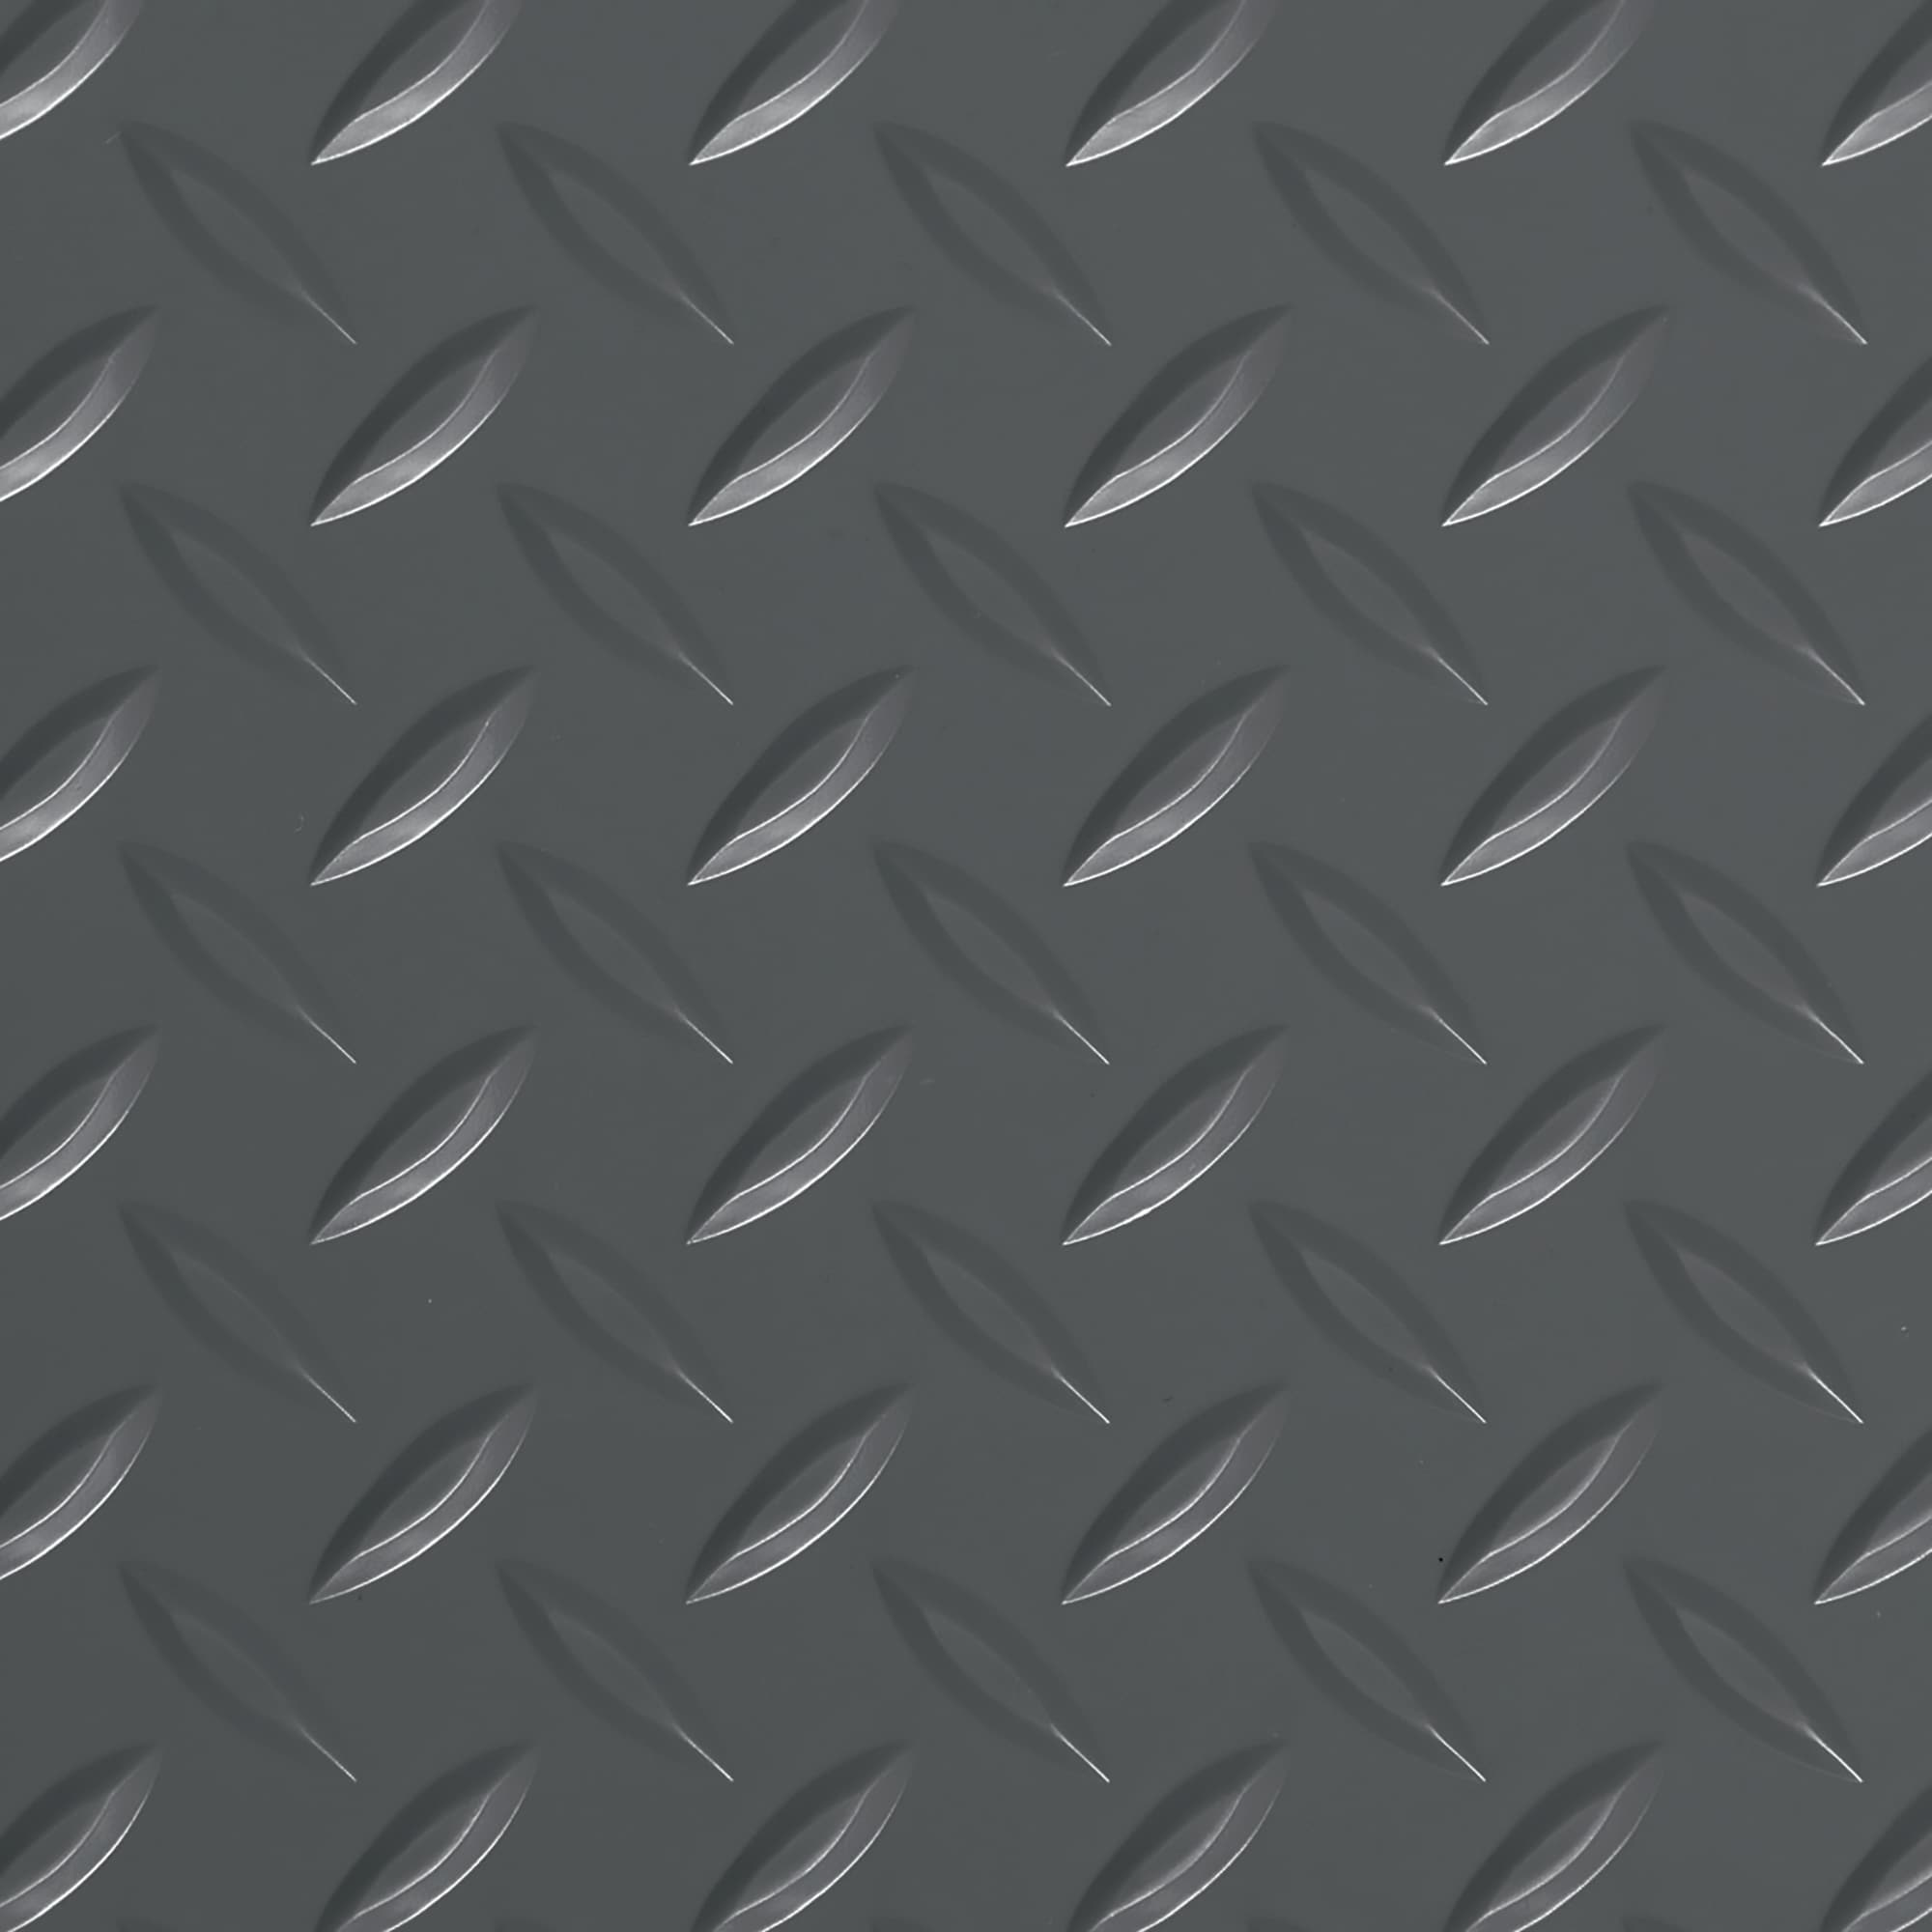 Techtongda Garage PVC Plastic Floor Basement Mat Diamond Plate Surface Rubber 79x197inch, Gray